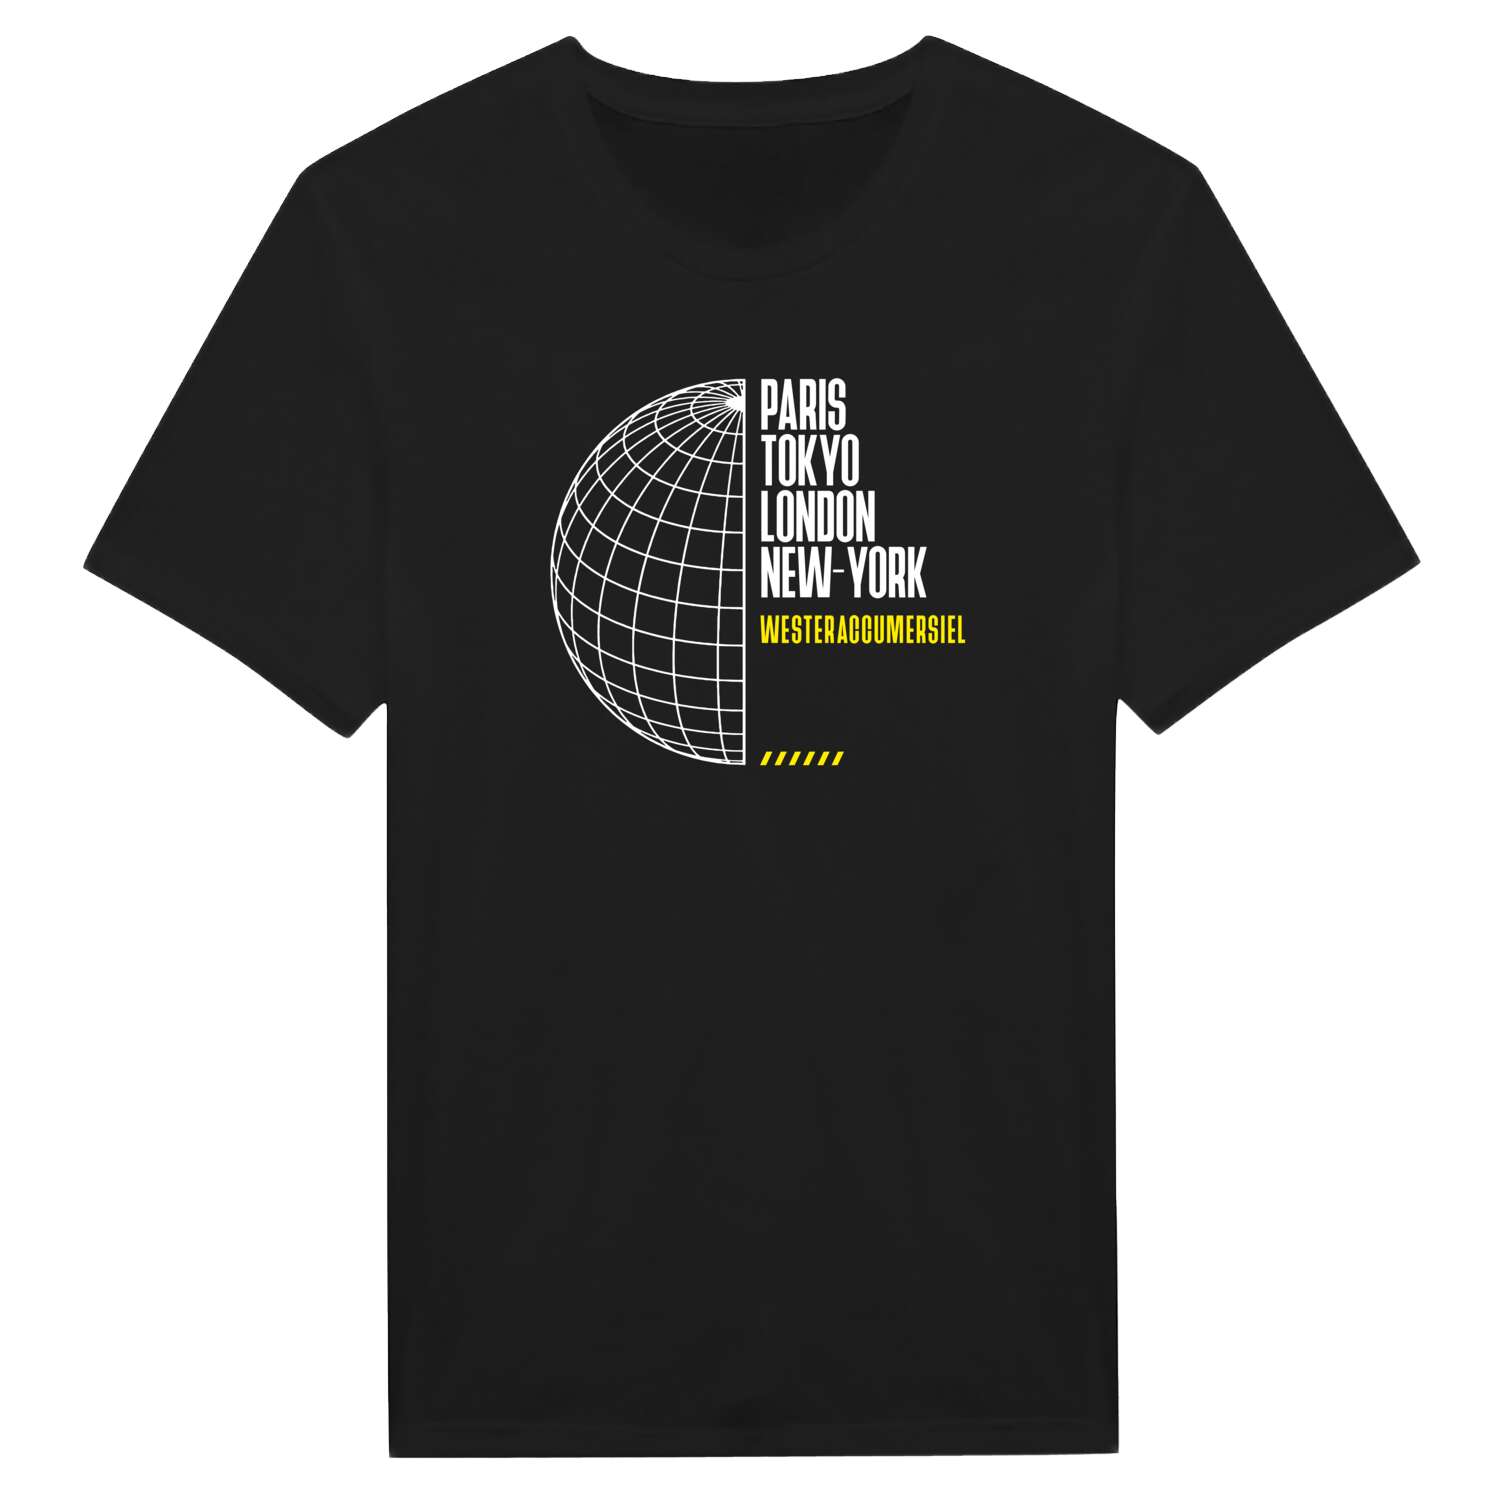 Westeraccumersiel T-Shirt »Paris Tokyo London«